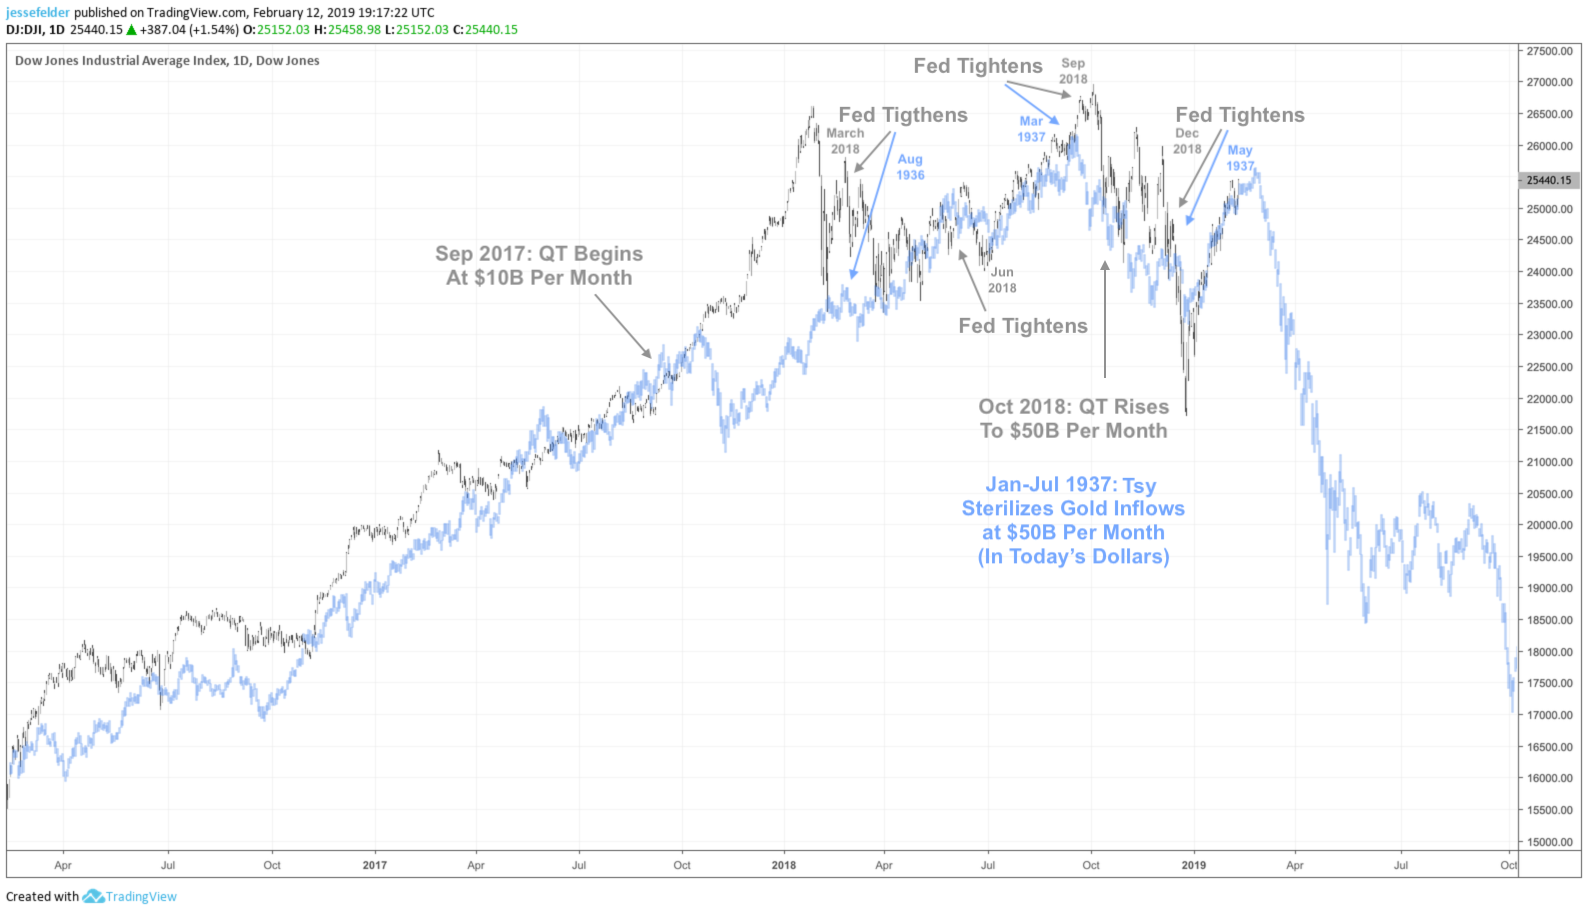 Dow Jones Index Falls Nearly 10%